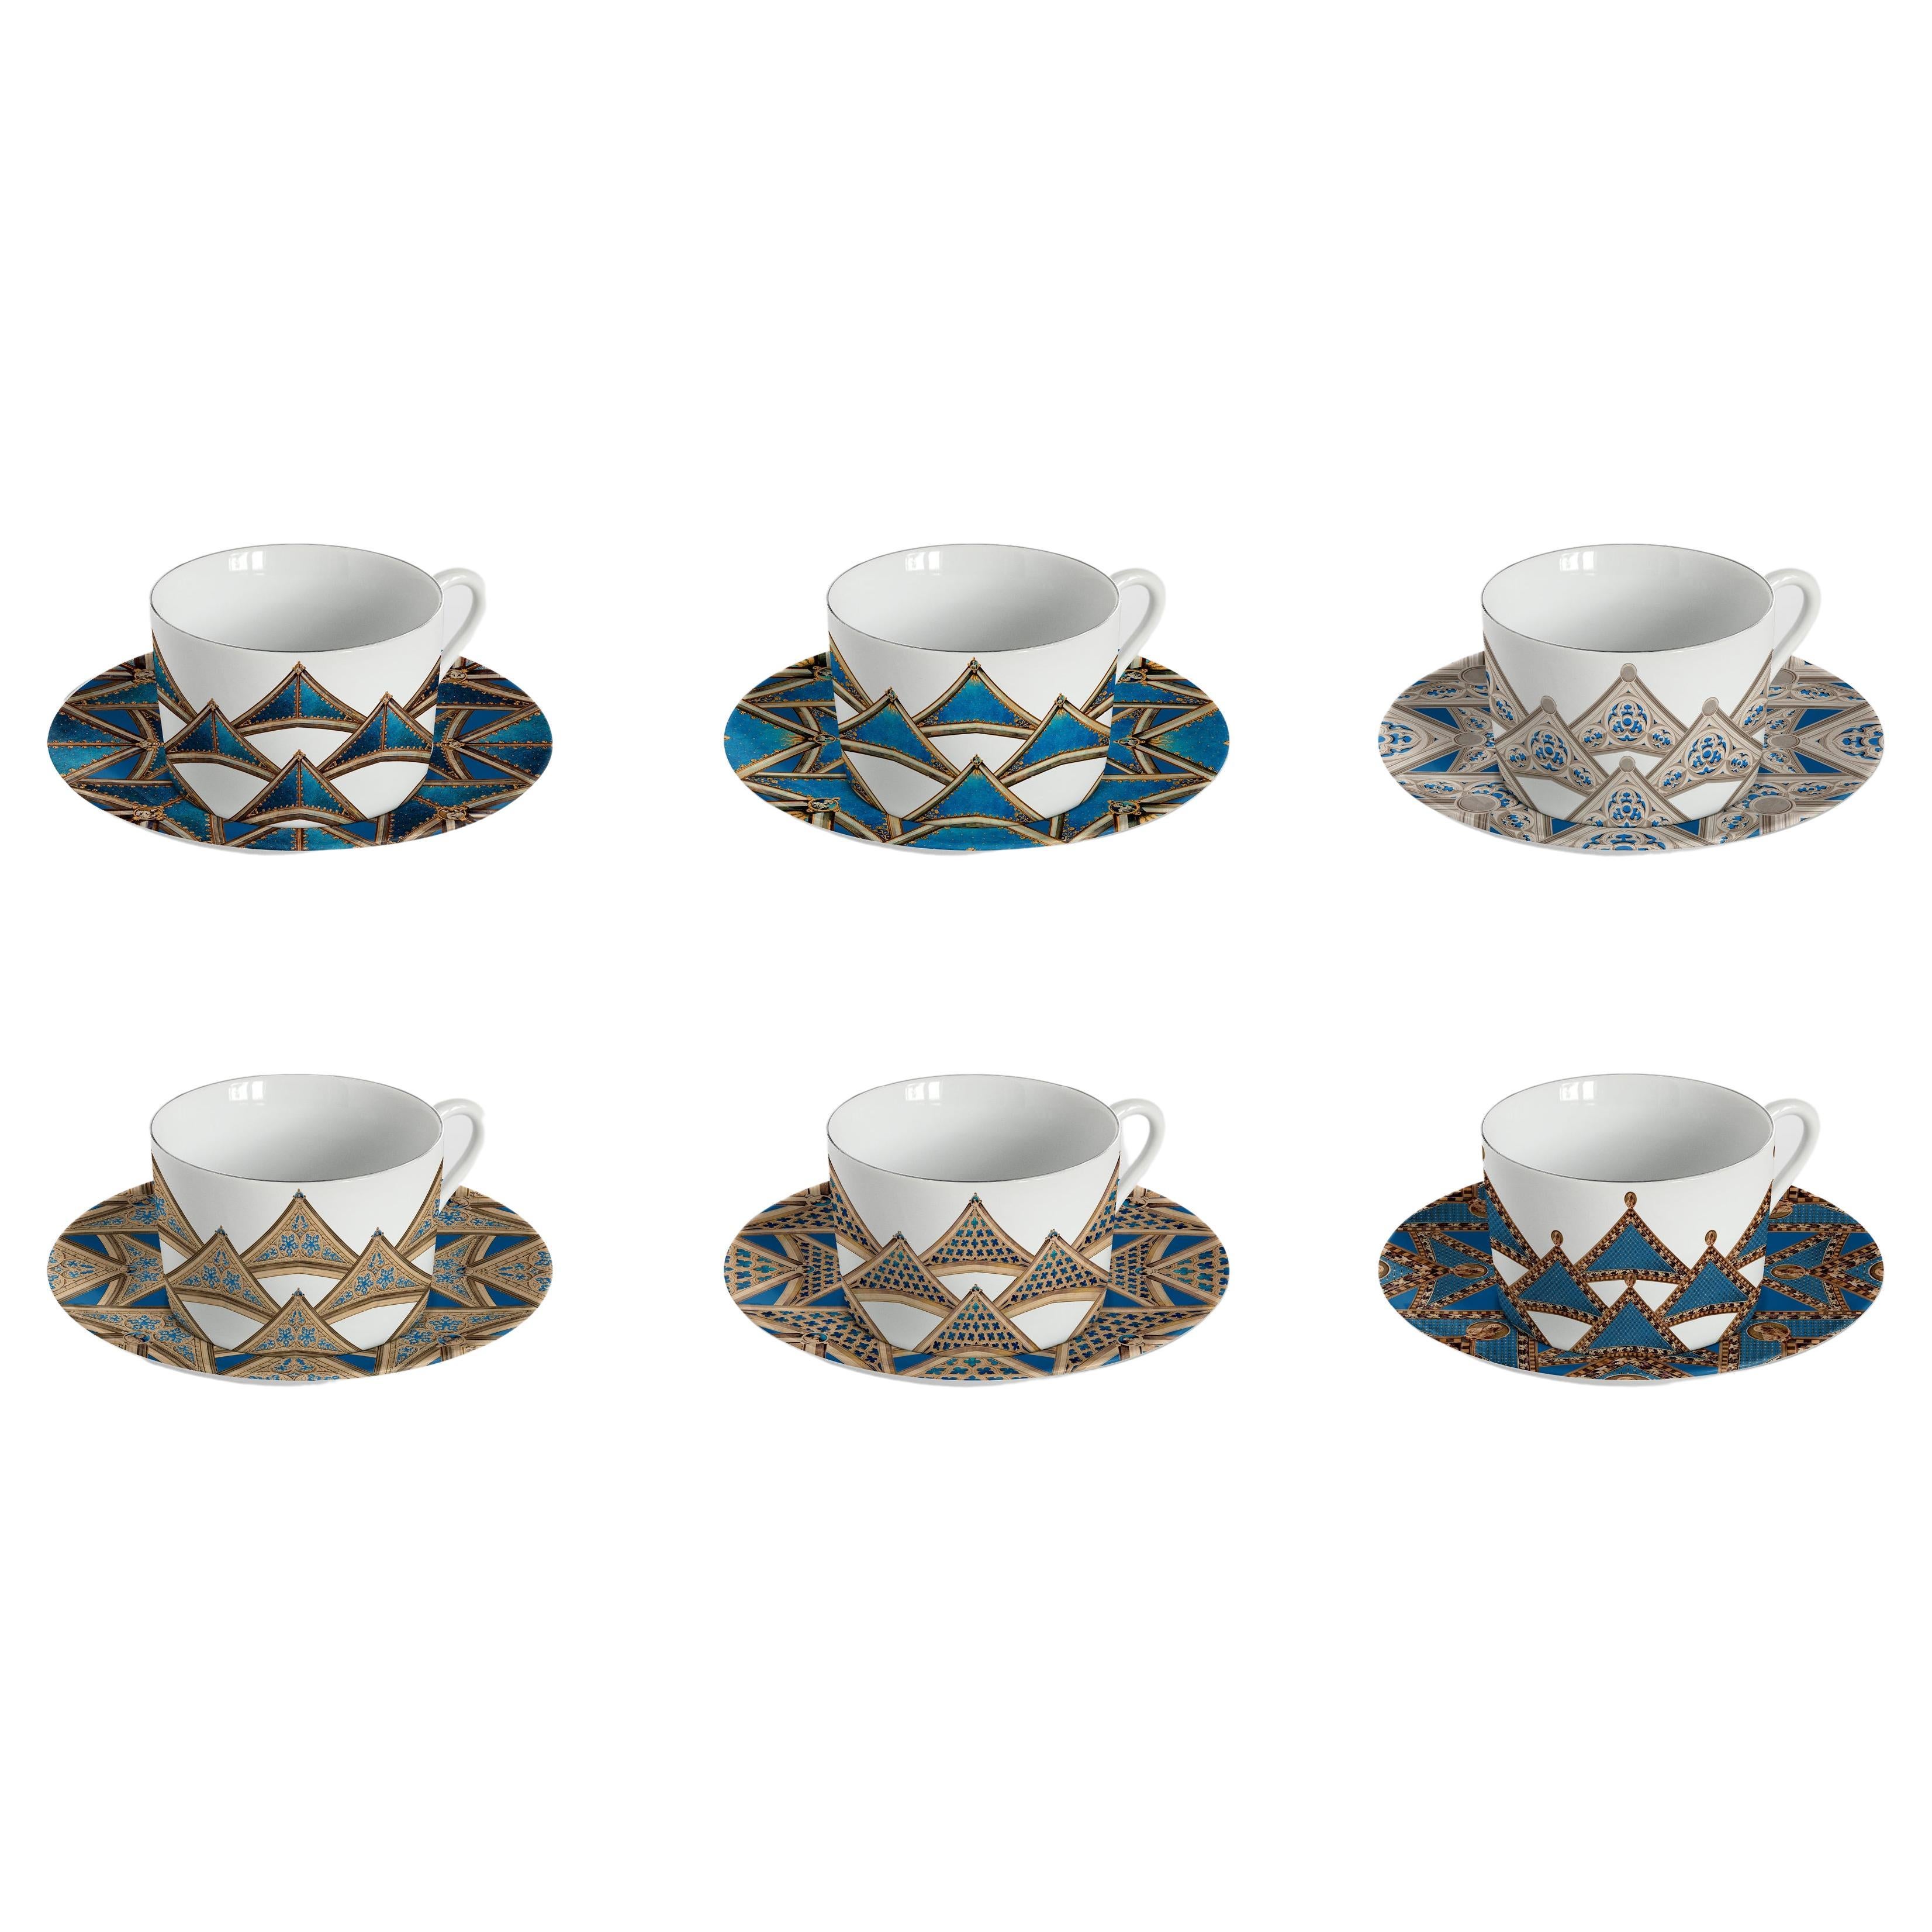 Le Volte Celesti, Six Contemporary Decorated Tea Cups with Plates